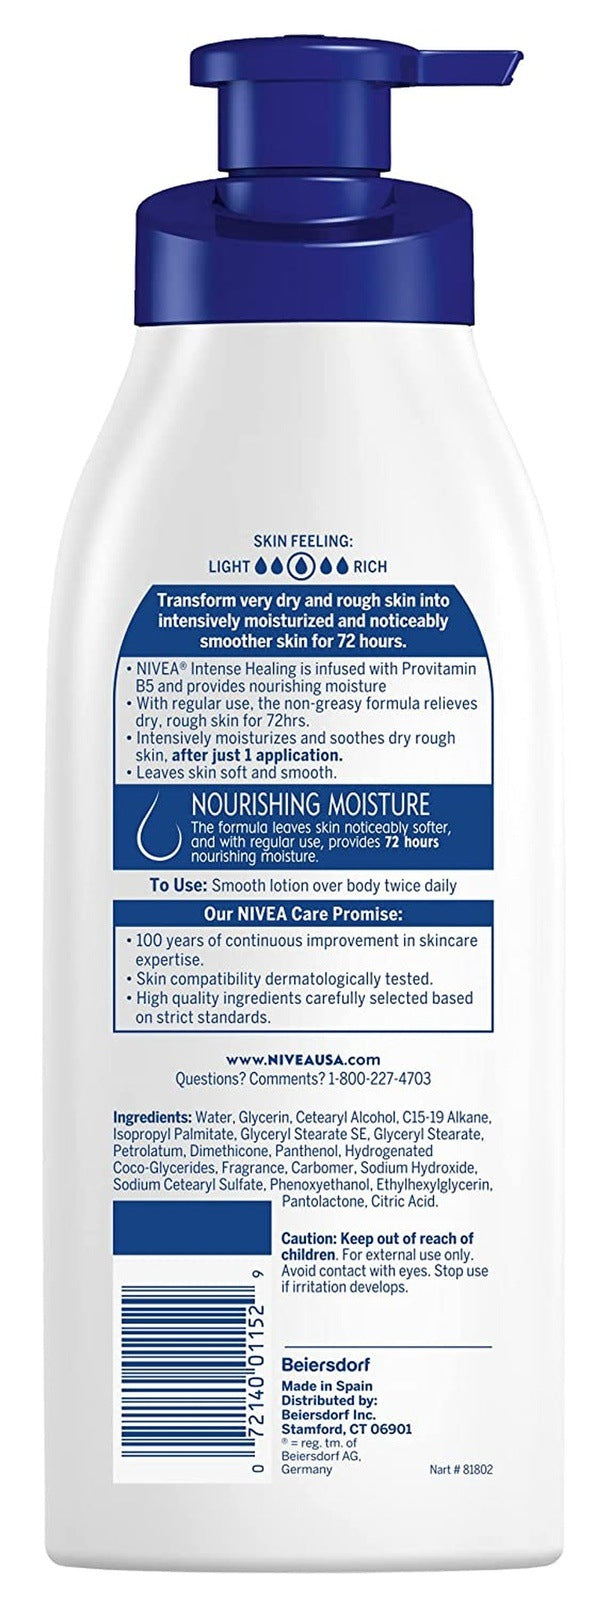 NIVEA - Intense Healing Body Lotion 72 Hour Moisture for Dry Skin